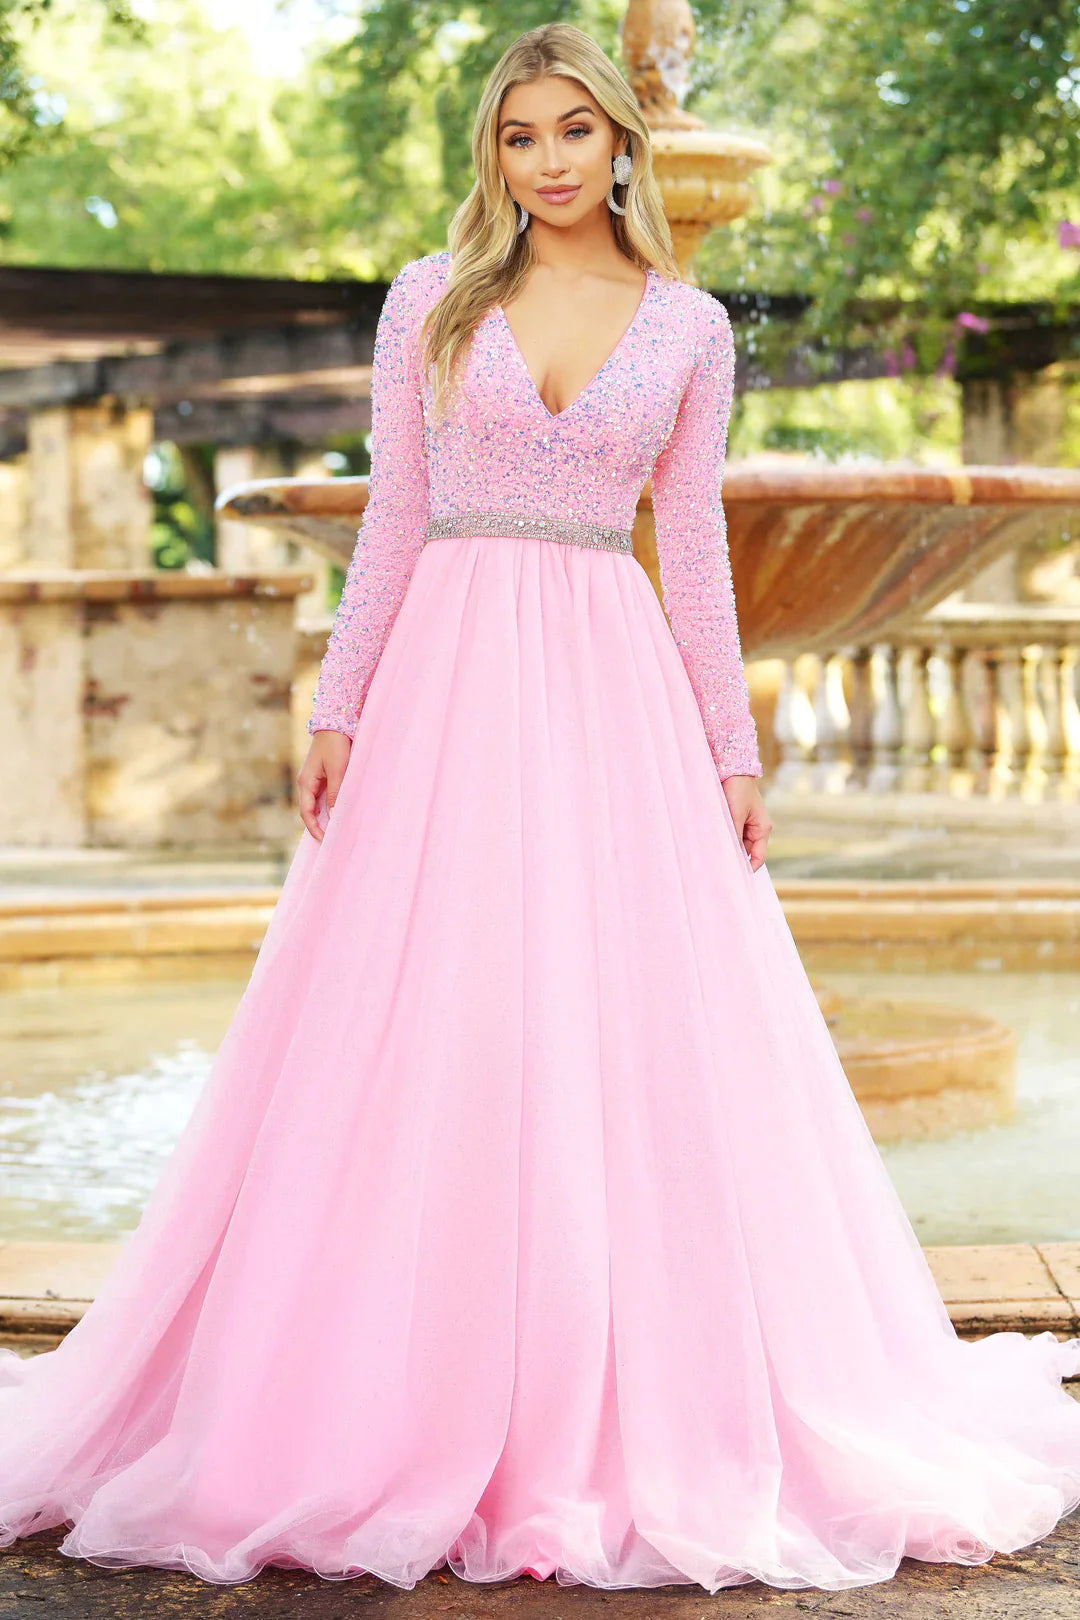 light pink long dresses